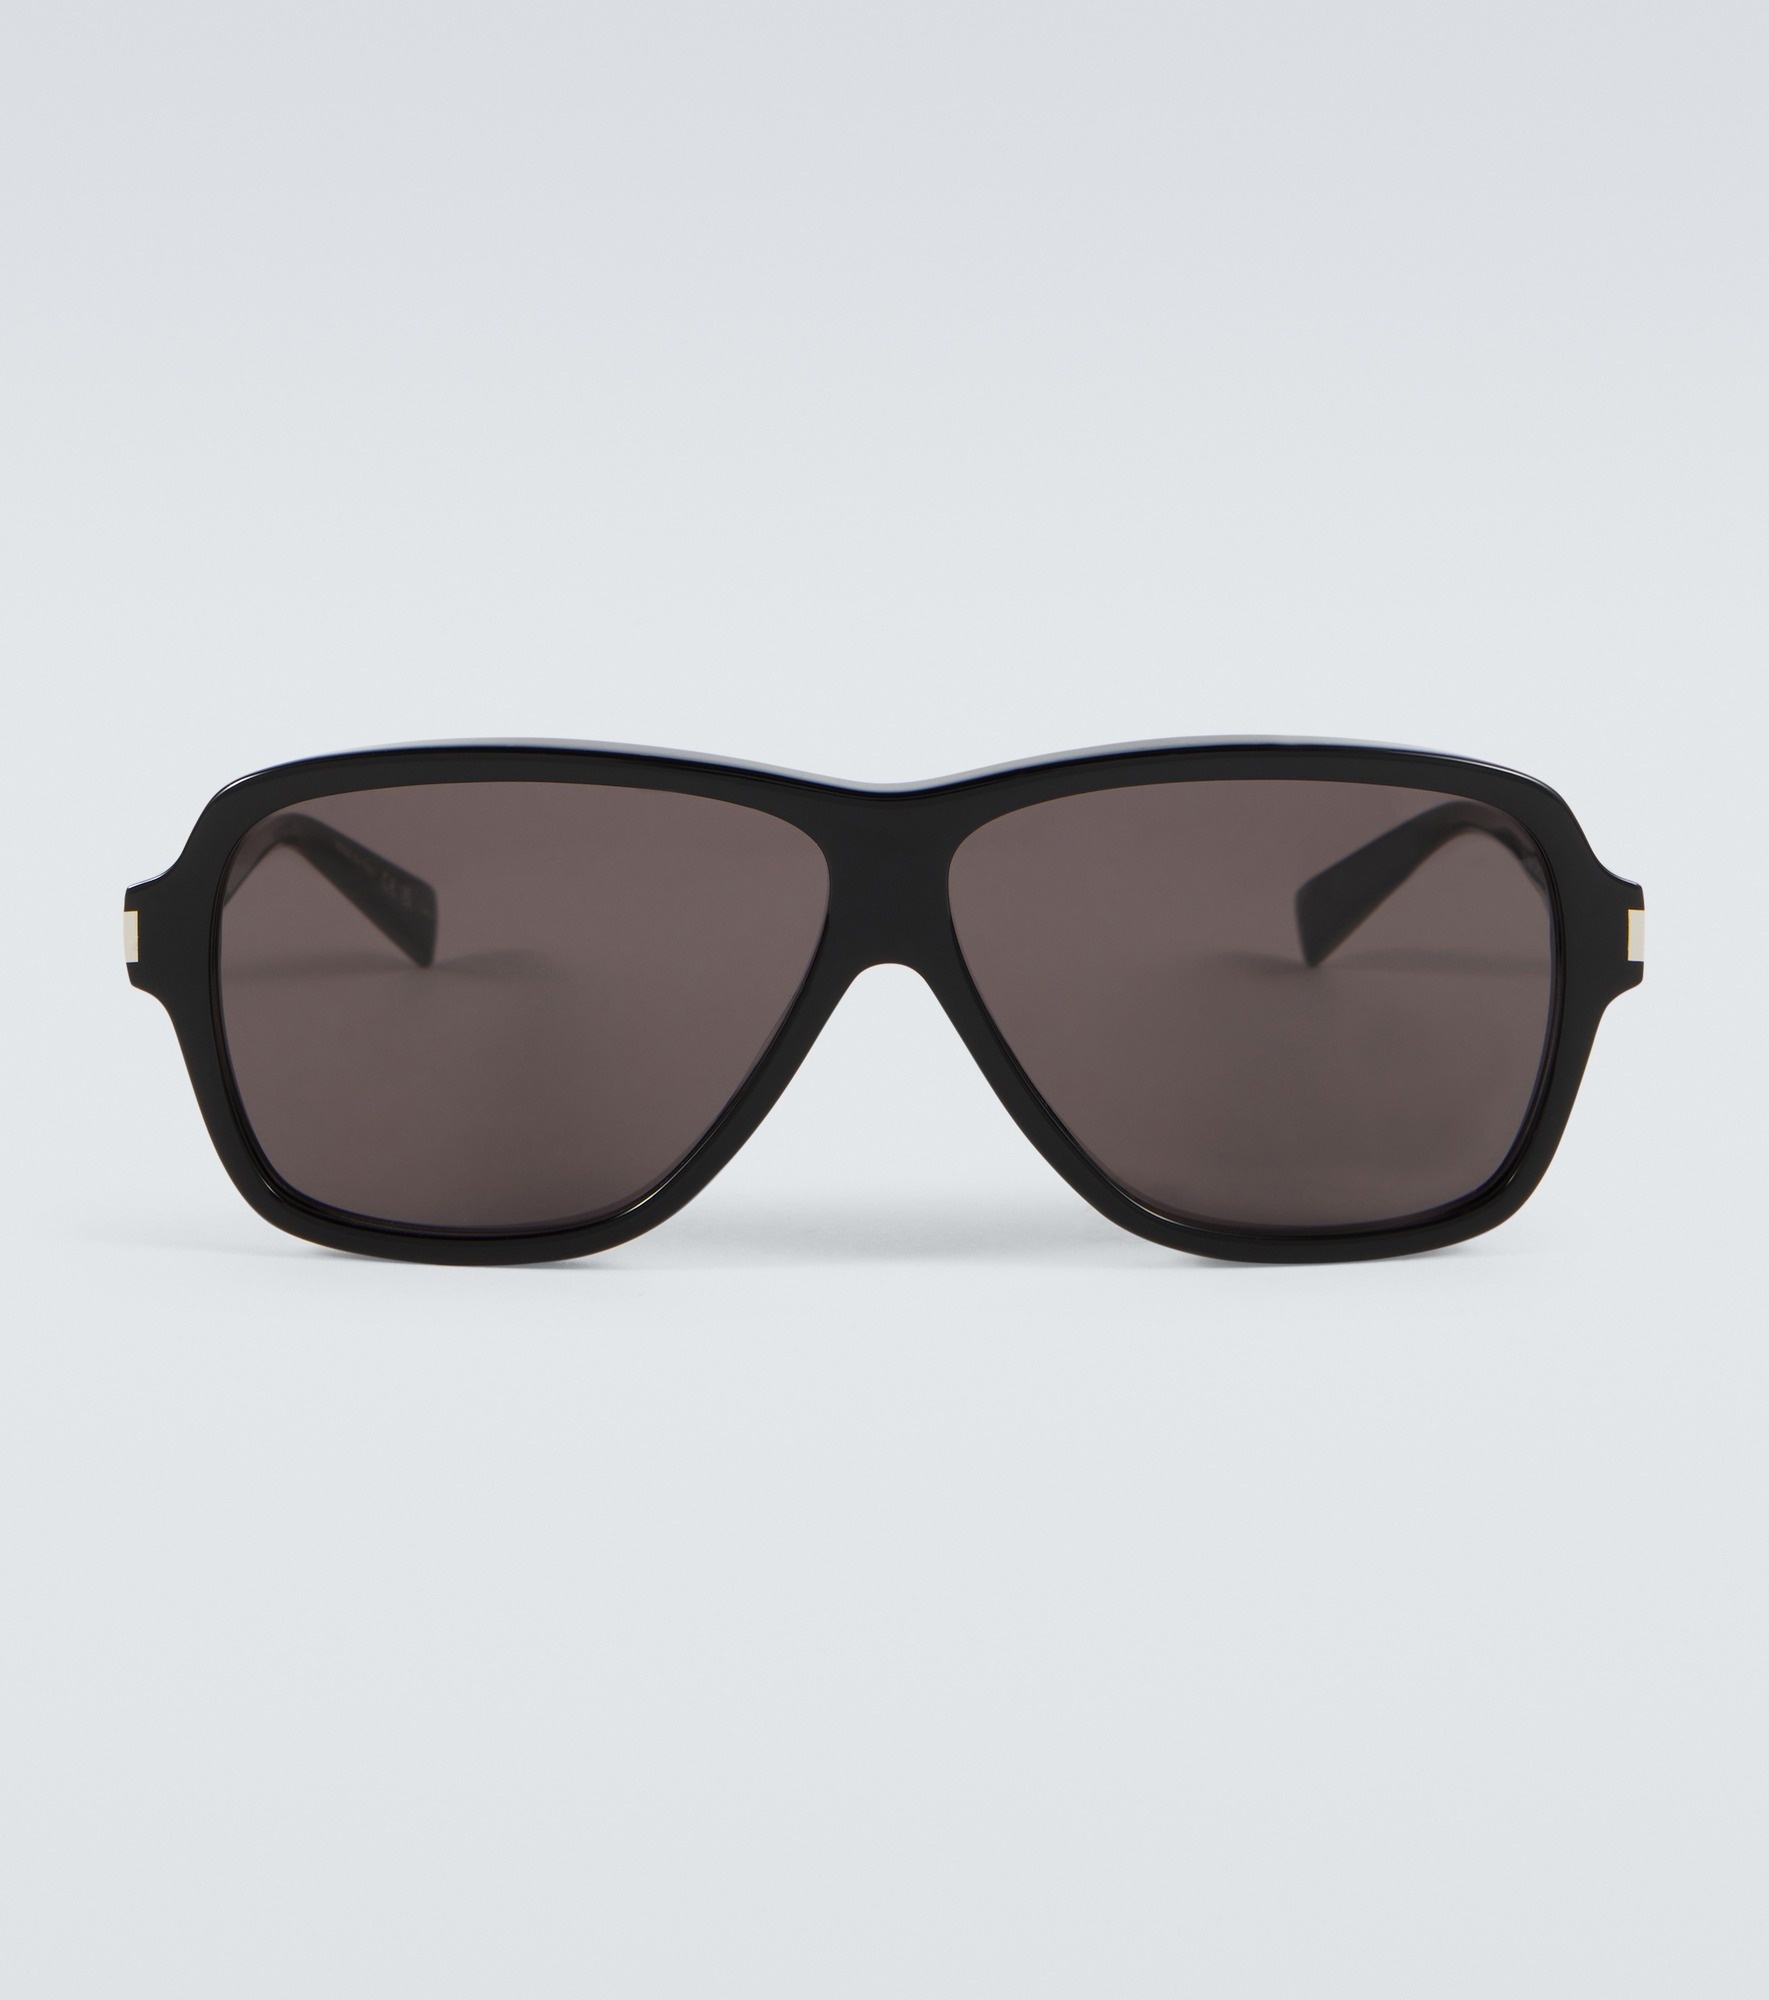 SL 609 Carolyn shield sunglasses - 1